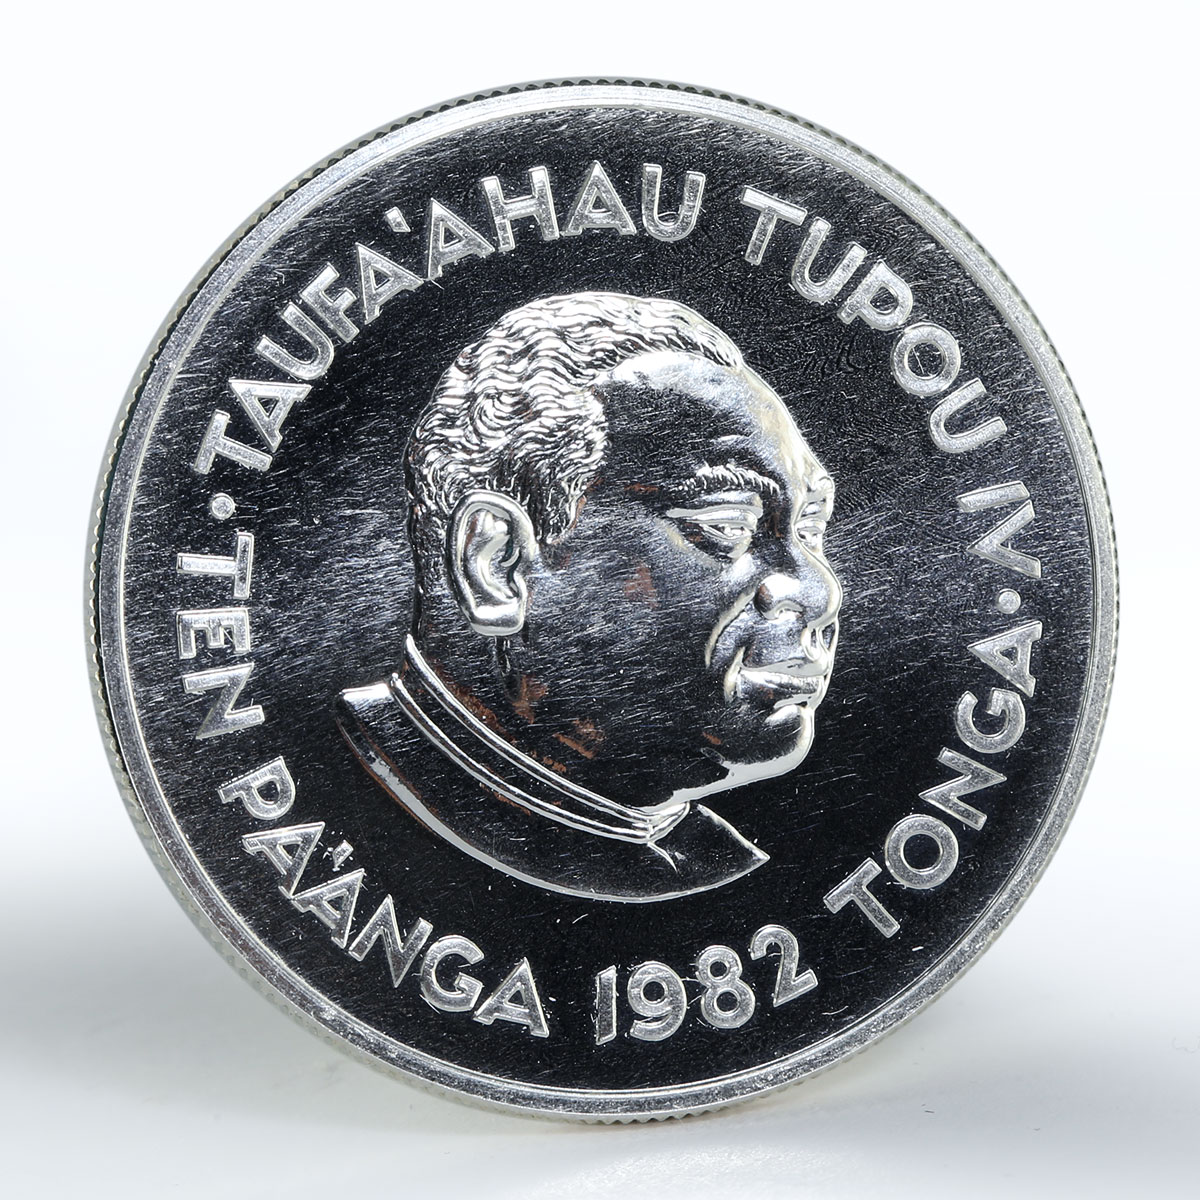 Tonga 10 pa'anga Commonwealth Games runners silver coin 1982